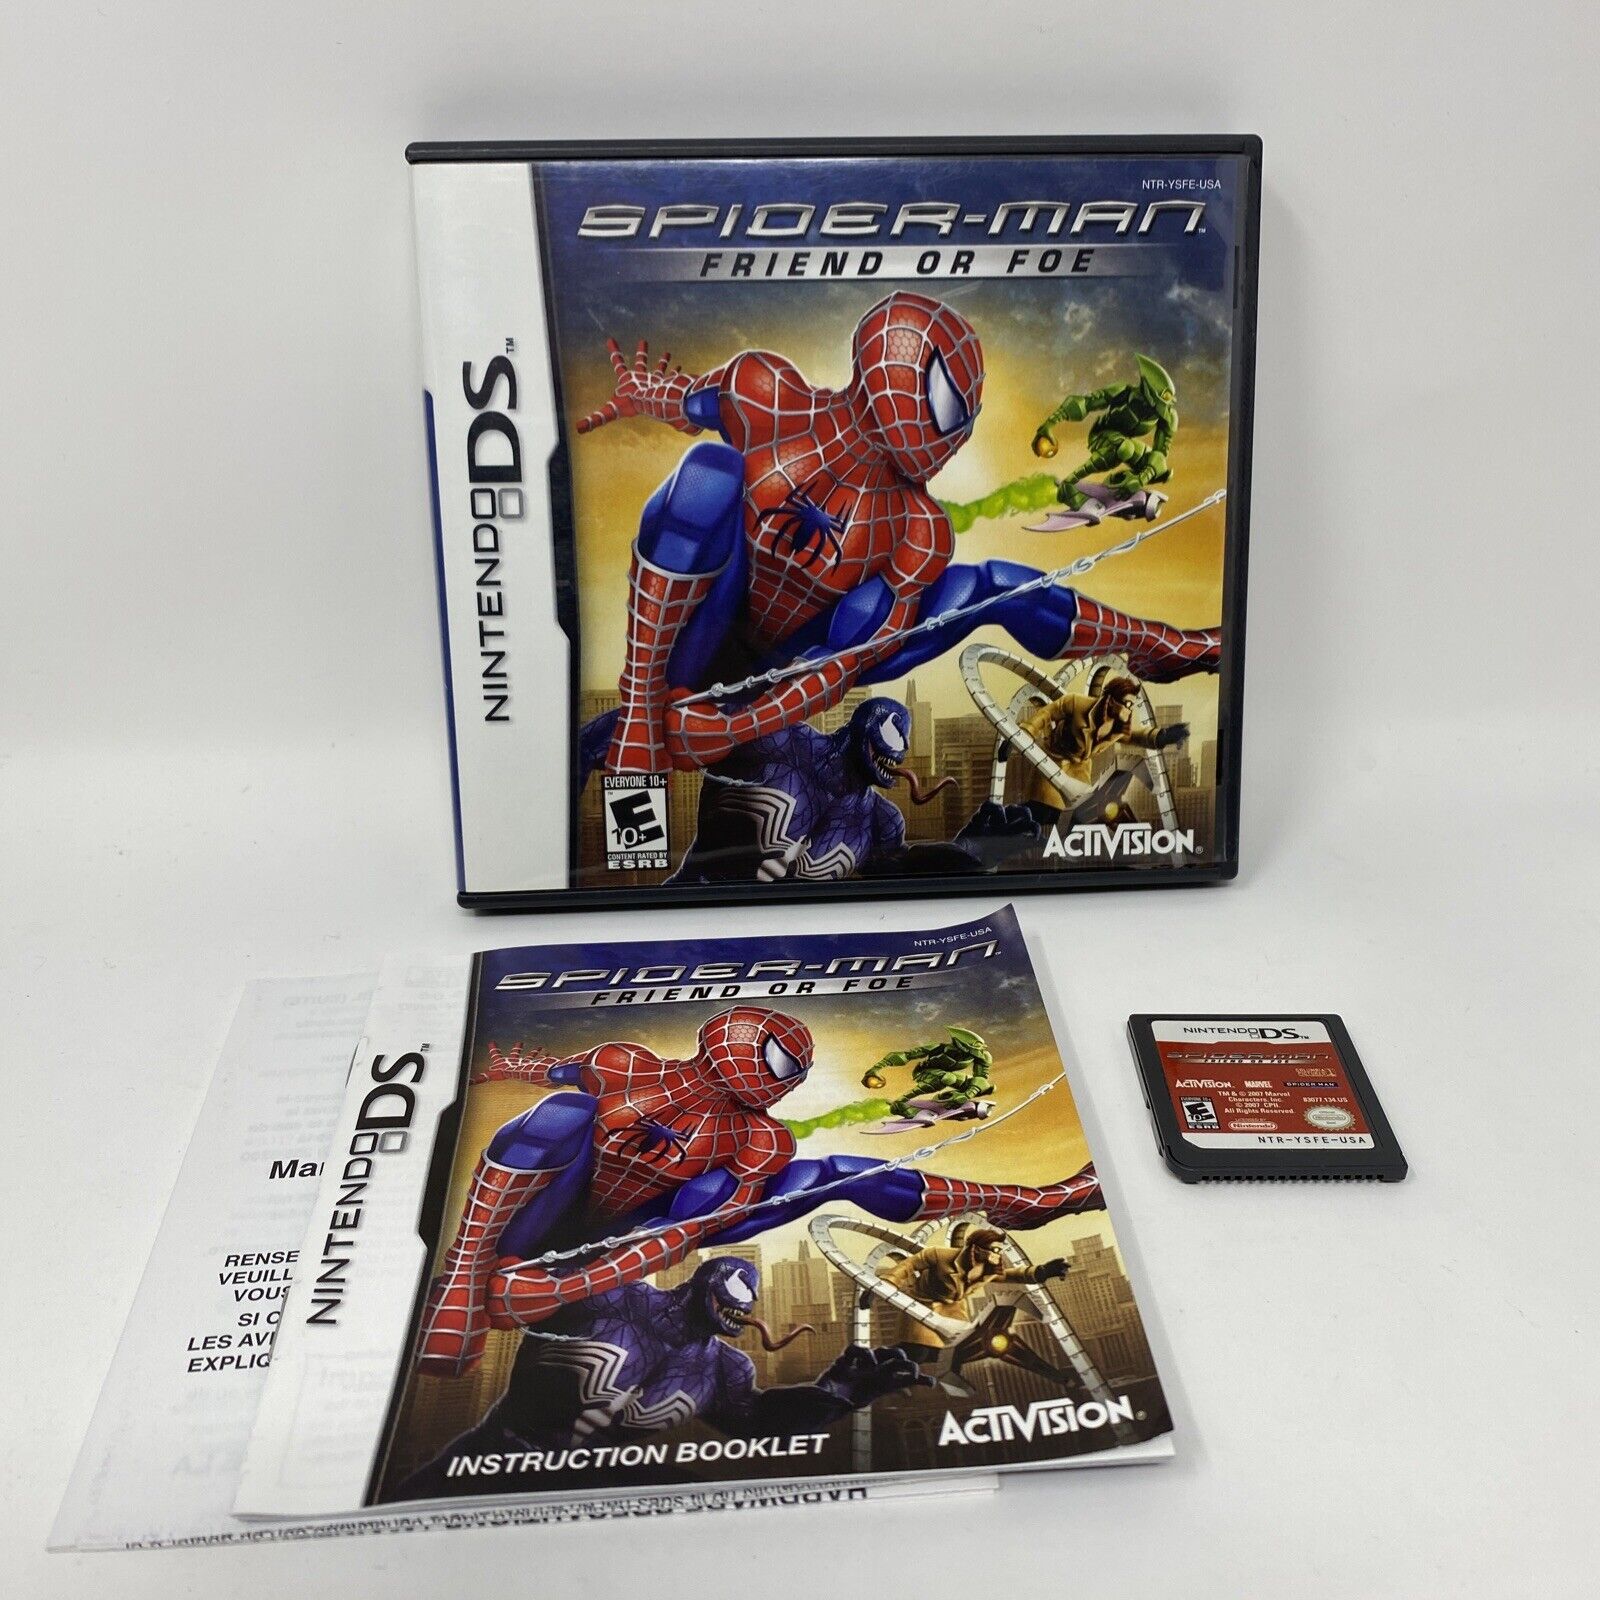 Spiderman Friend or Foe Nintendo DS - Complete CIB